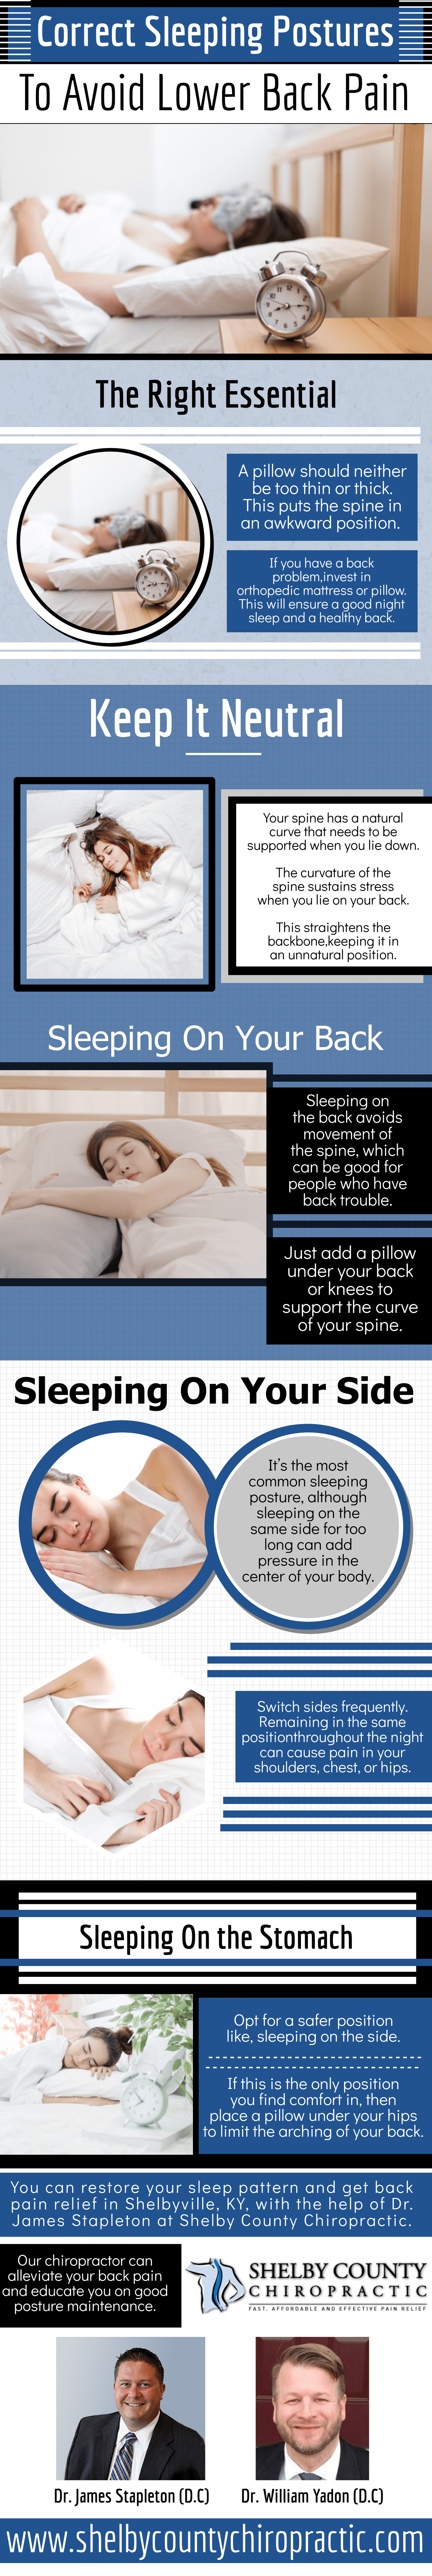 Correct Sleeping Postures